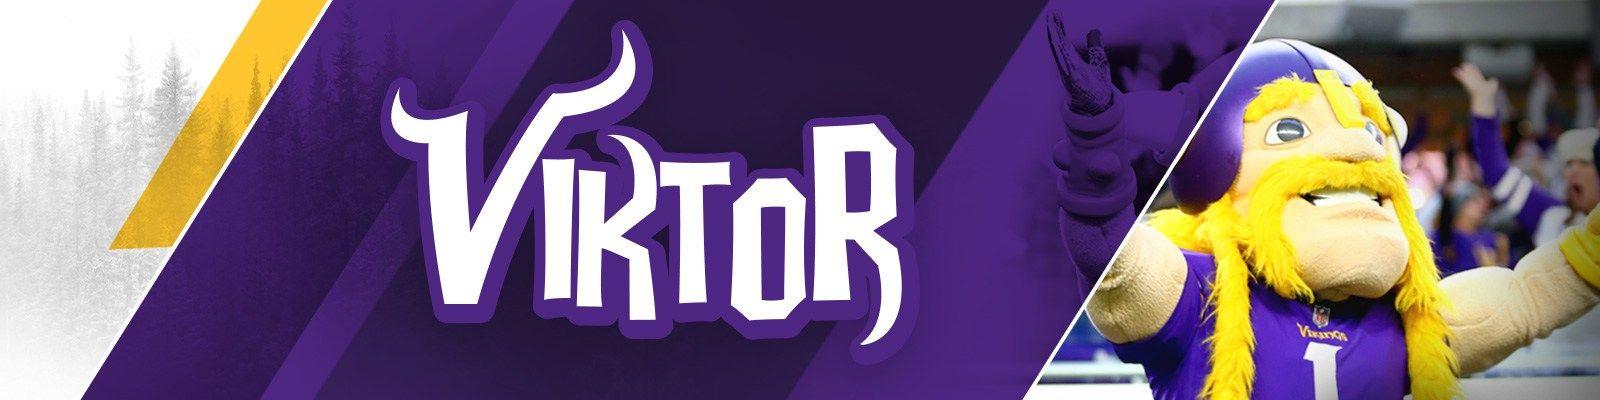 Purple Viking Logo - Viktor the Viking Bio